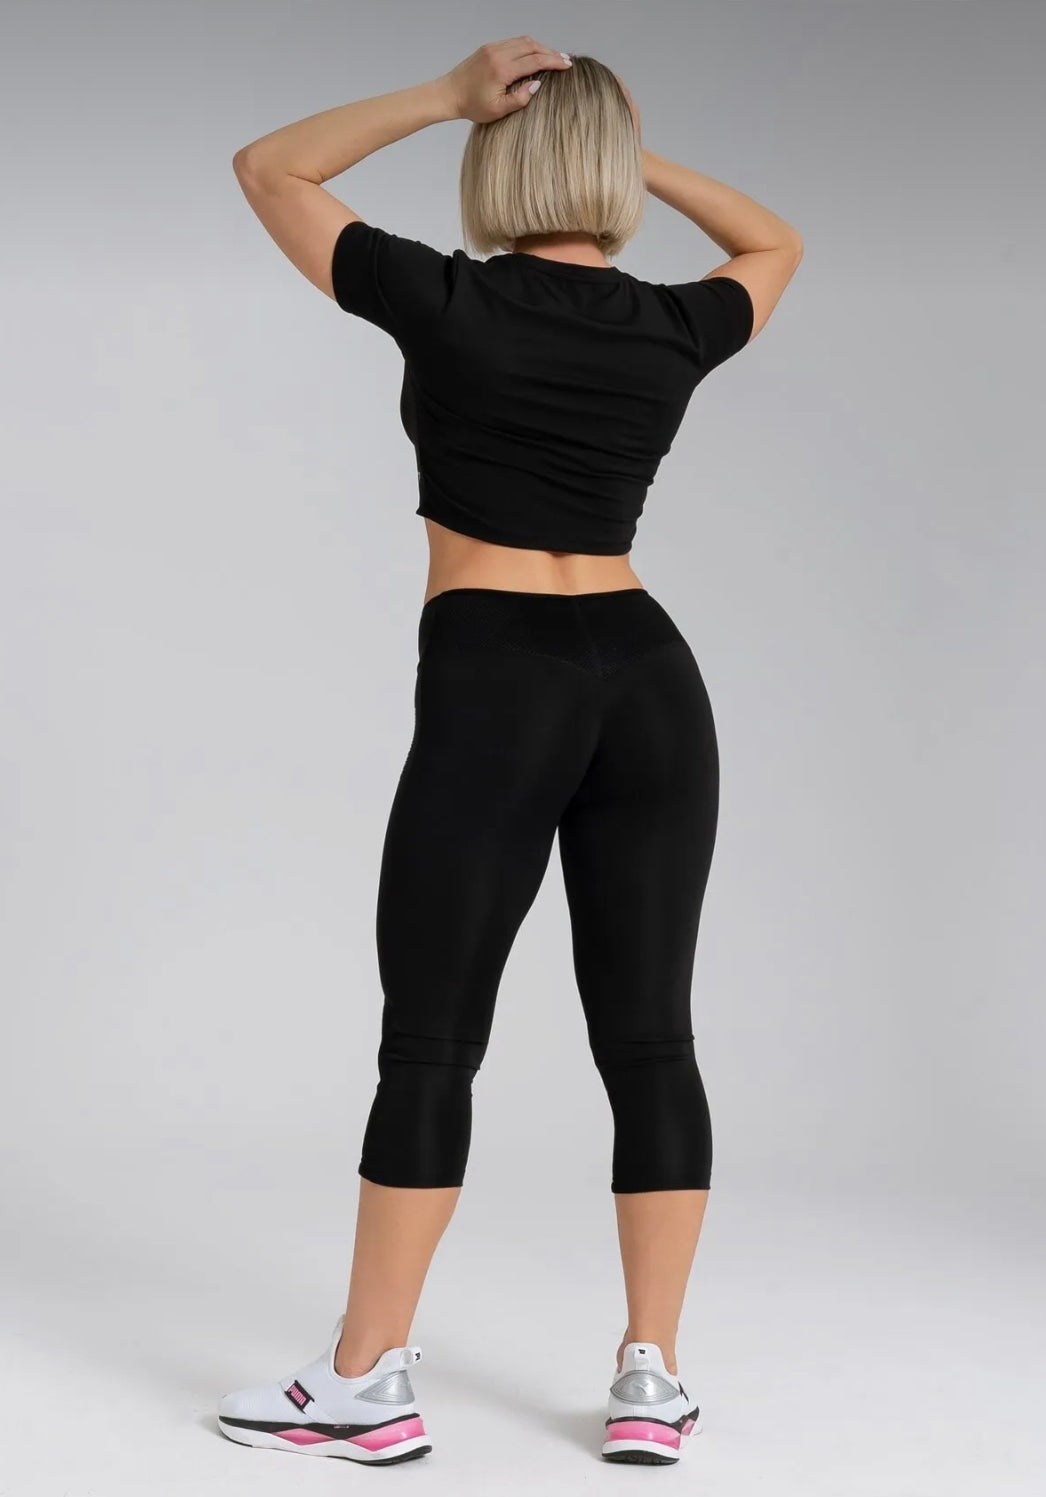 Gymwolves Women's Sports Capri Tights |  Black |  Sports Short Tights